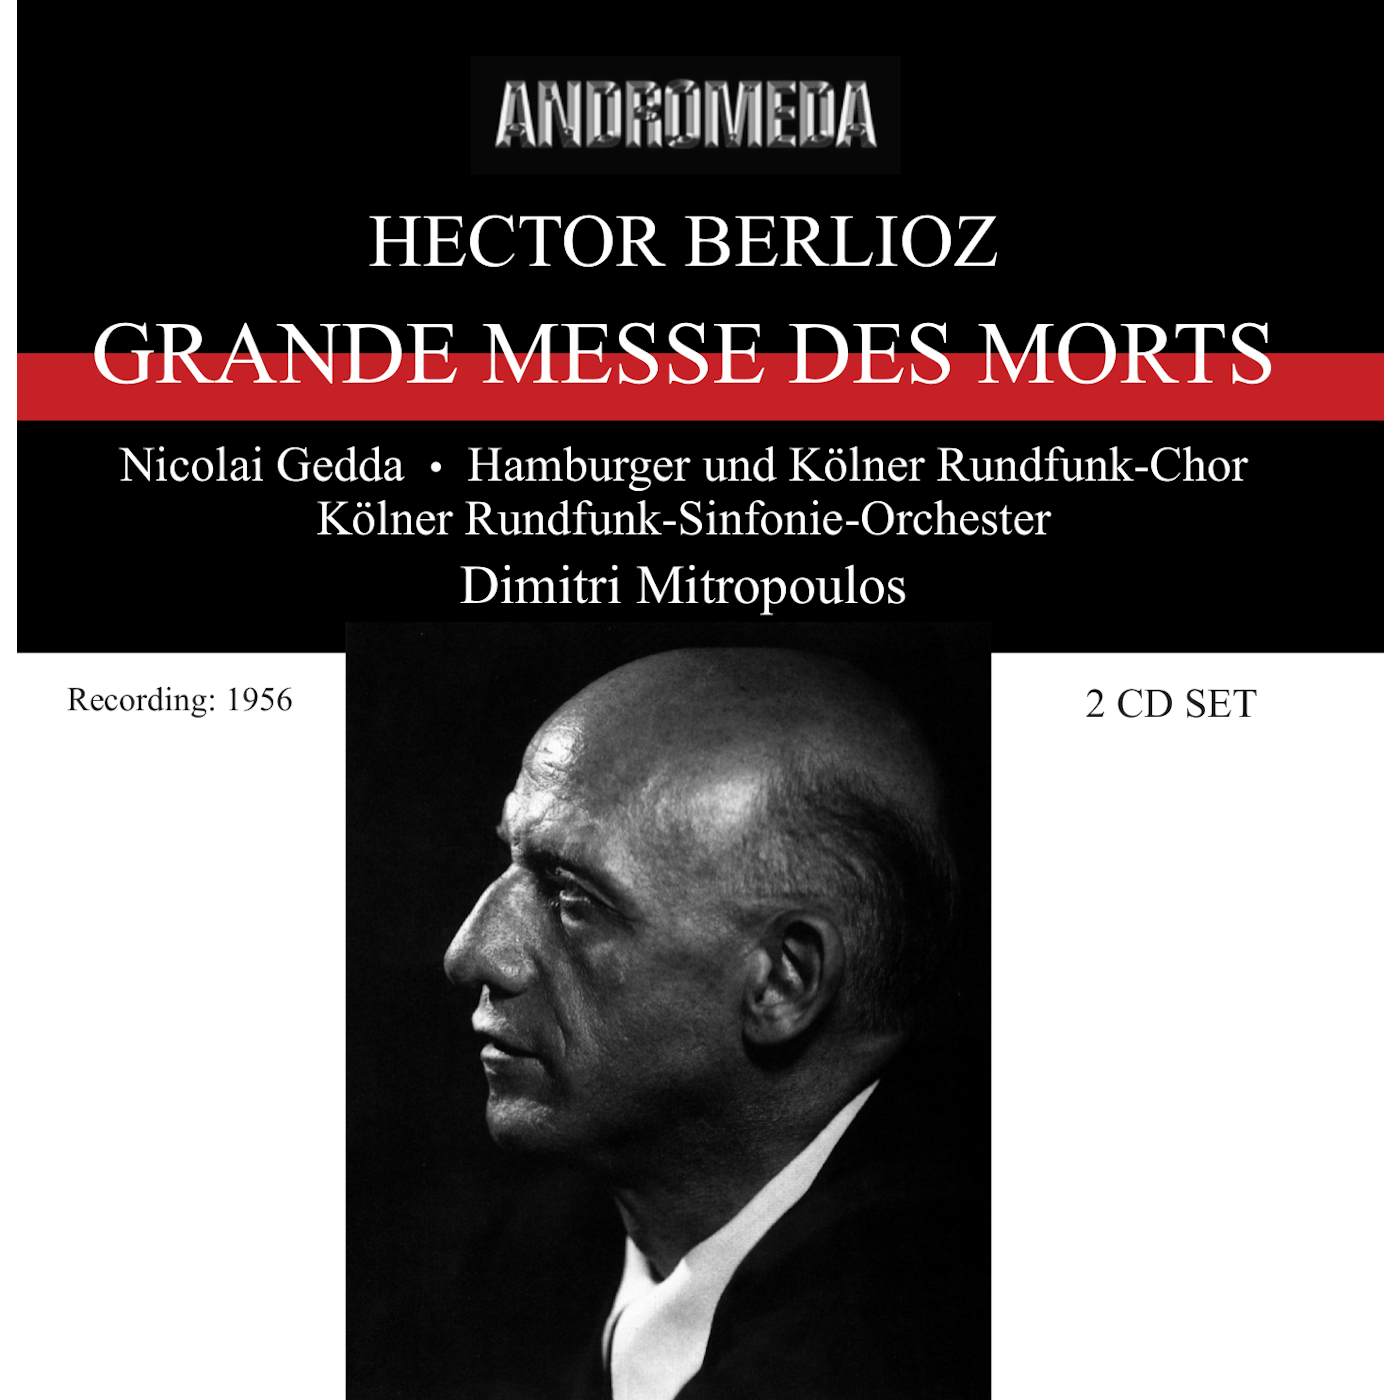 Berlioz GRANDE MESSE DES MORTS CD